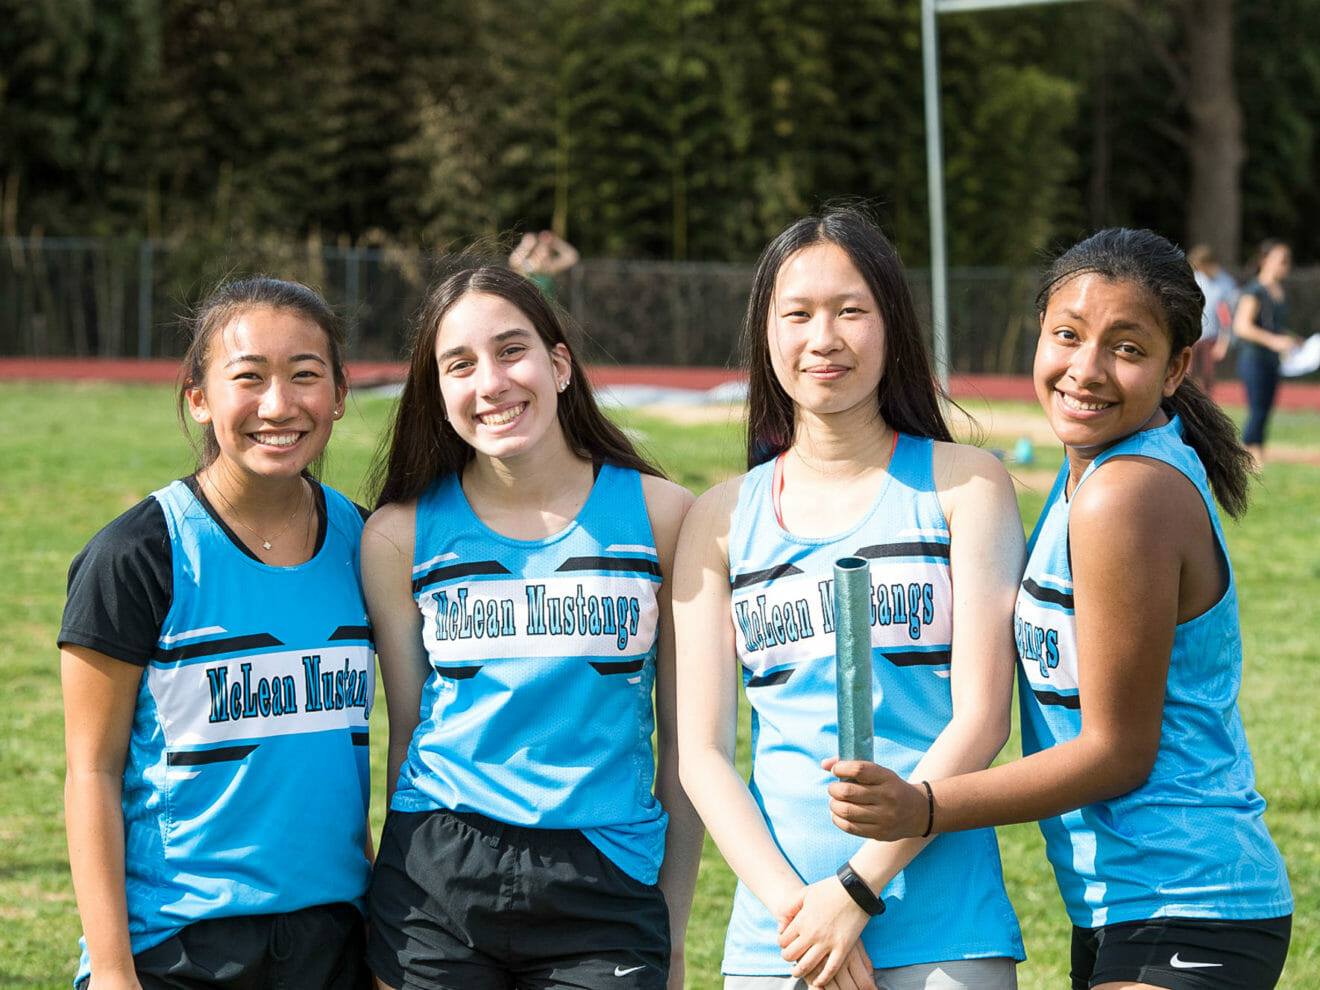 McLean girls track team stands together